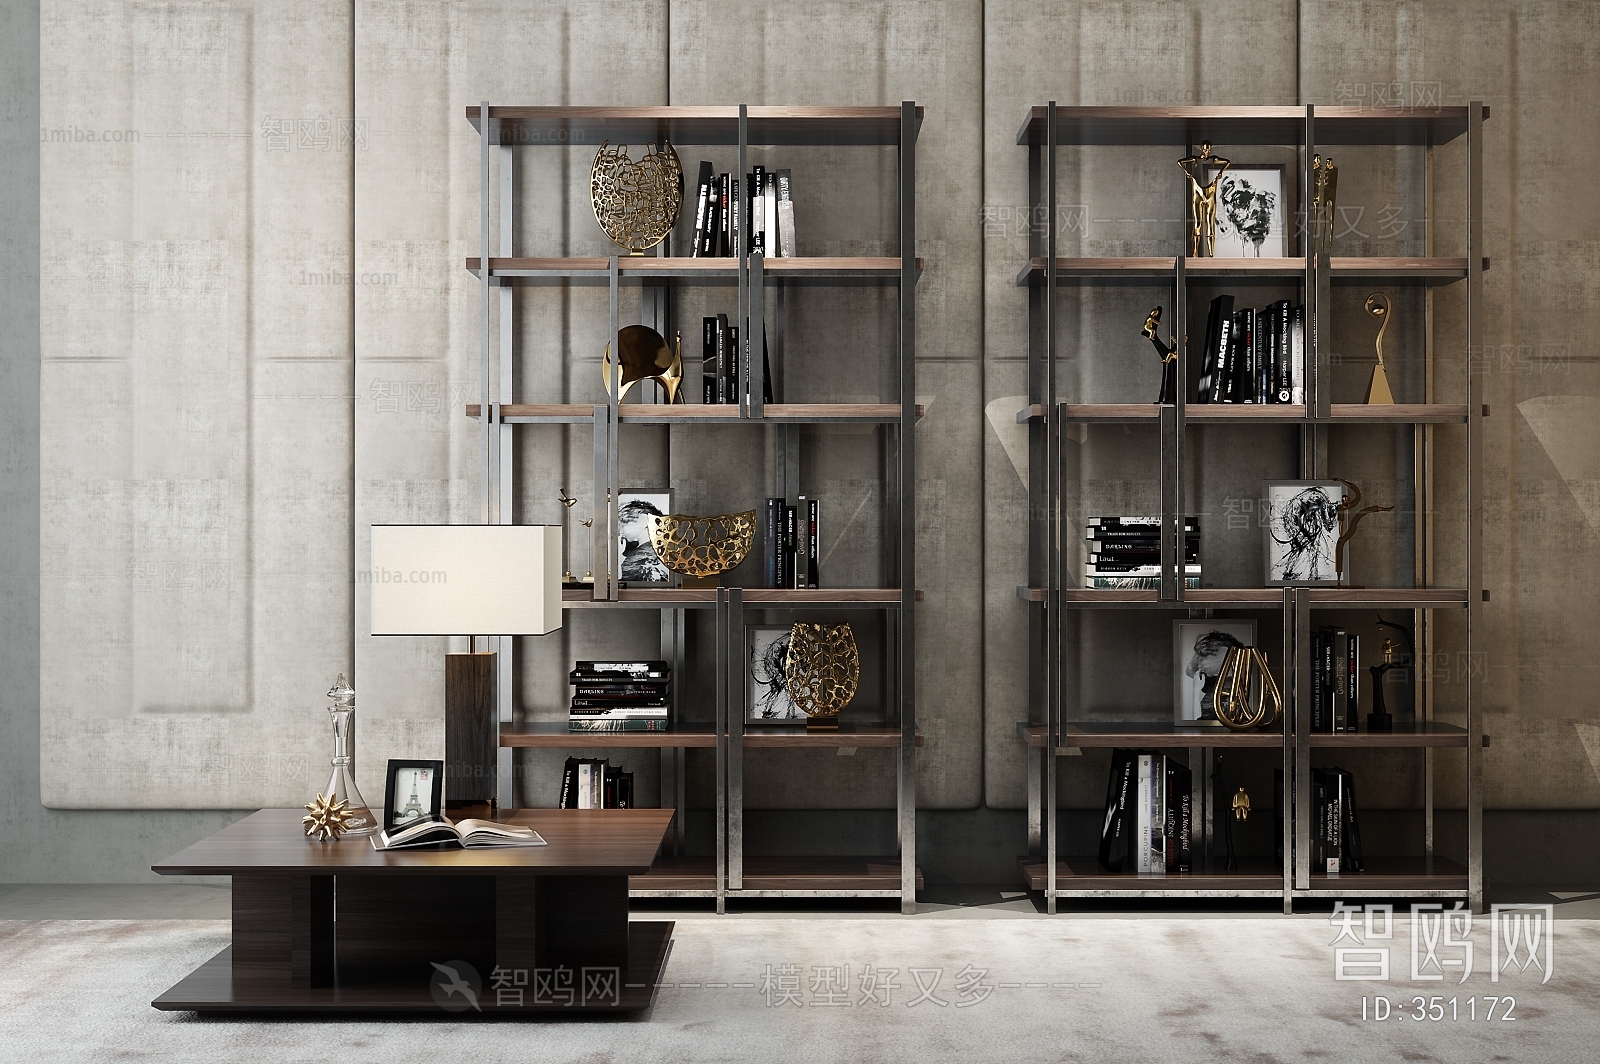 Industrial Style Bookshelf